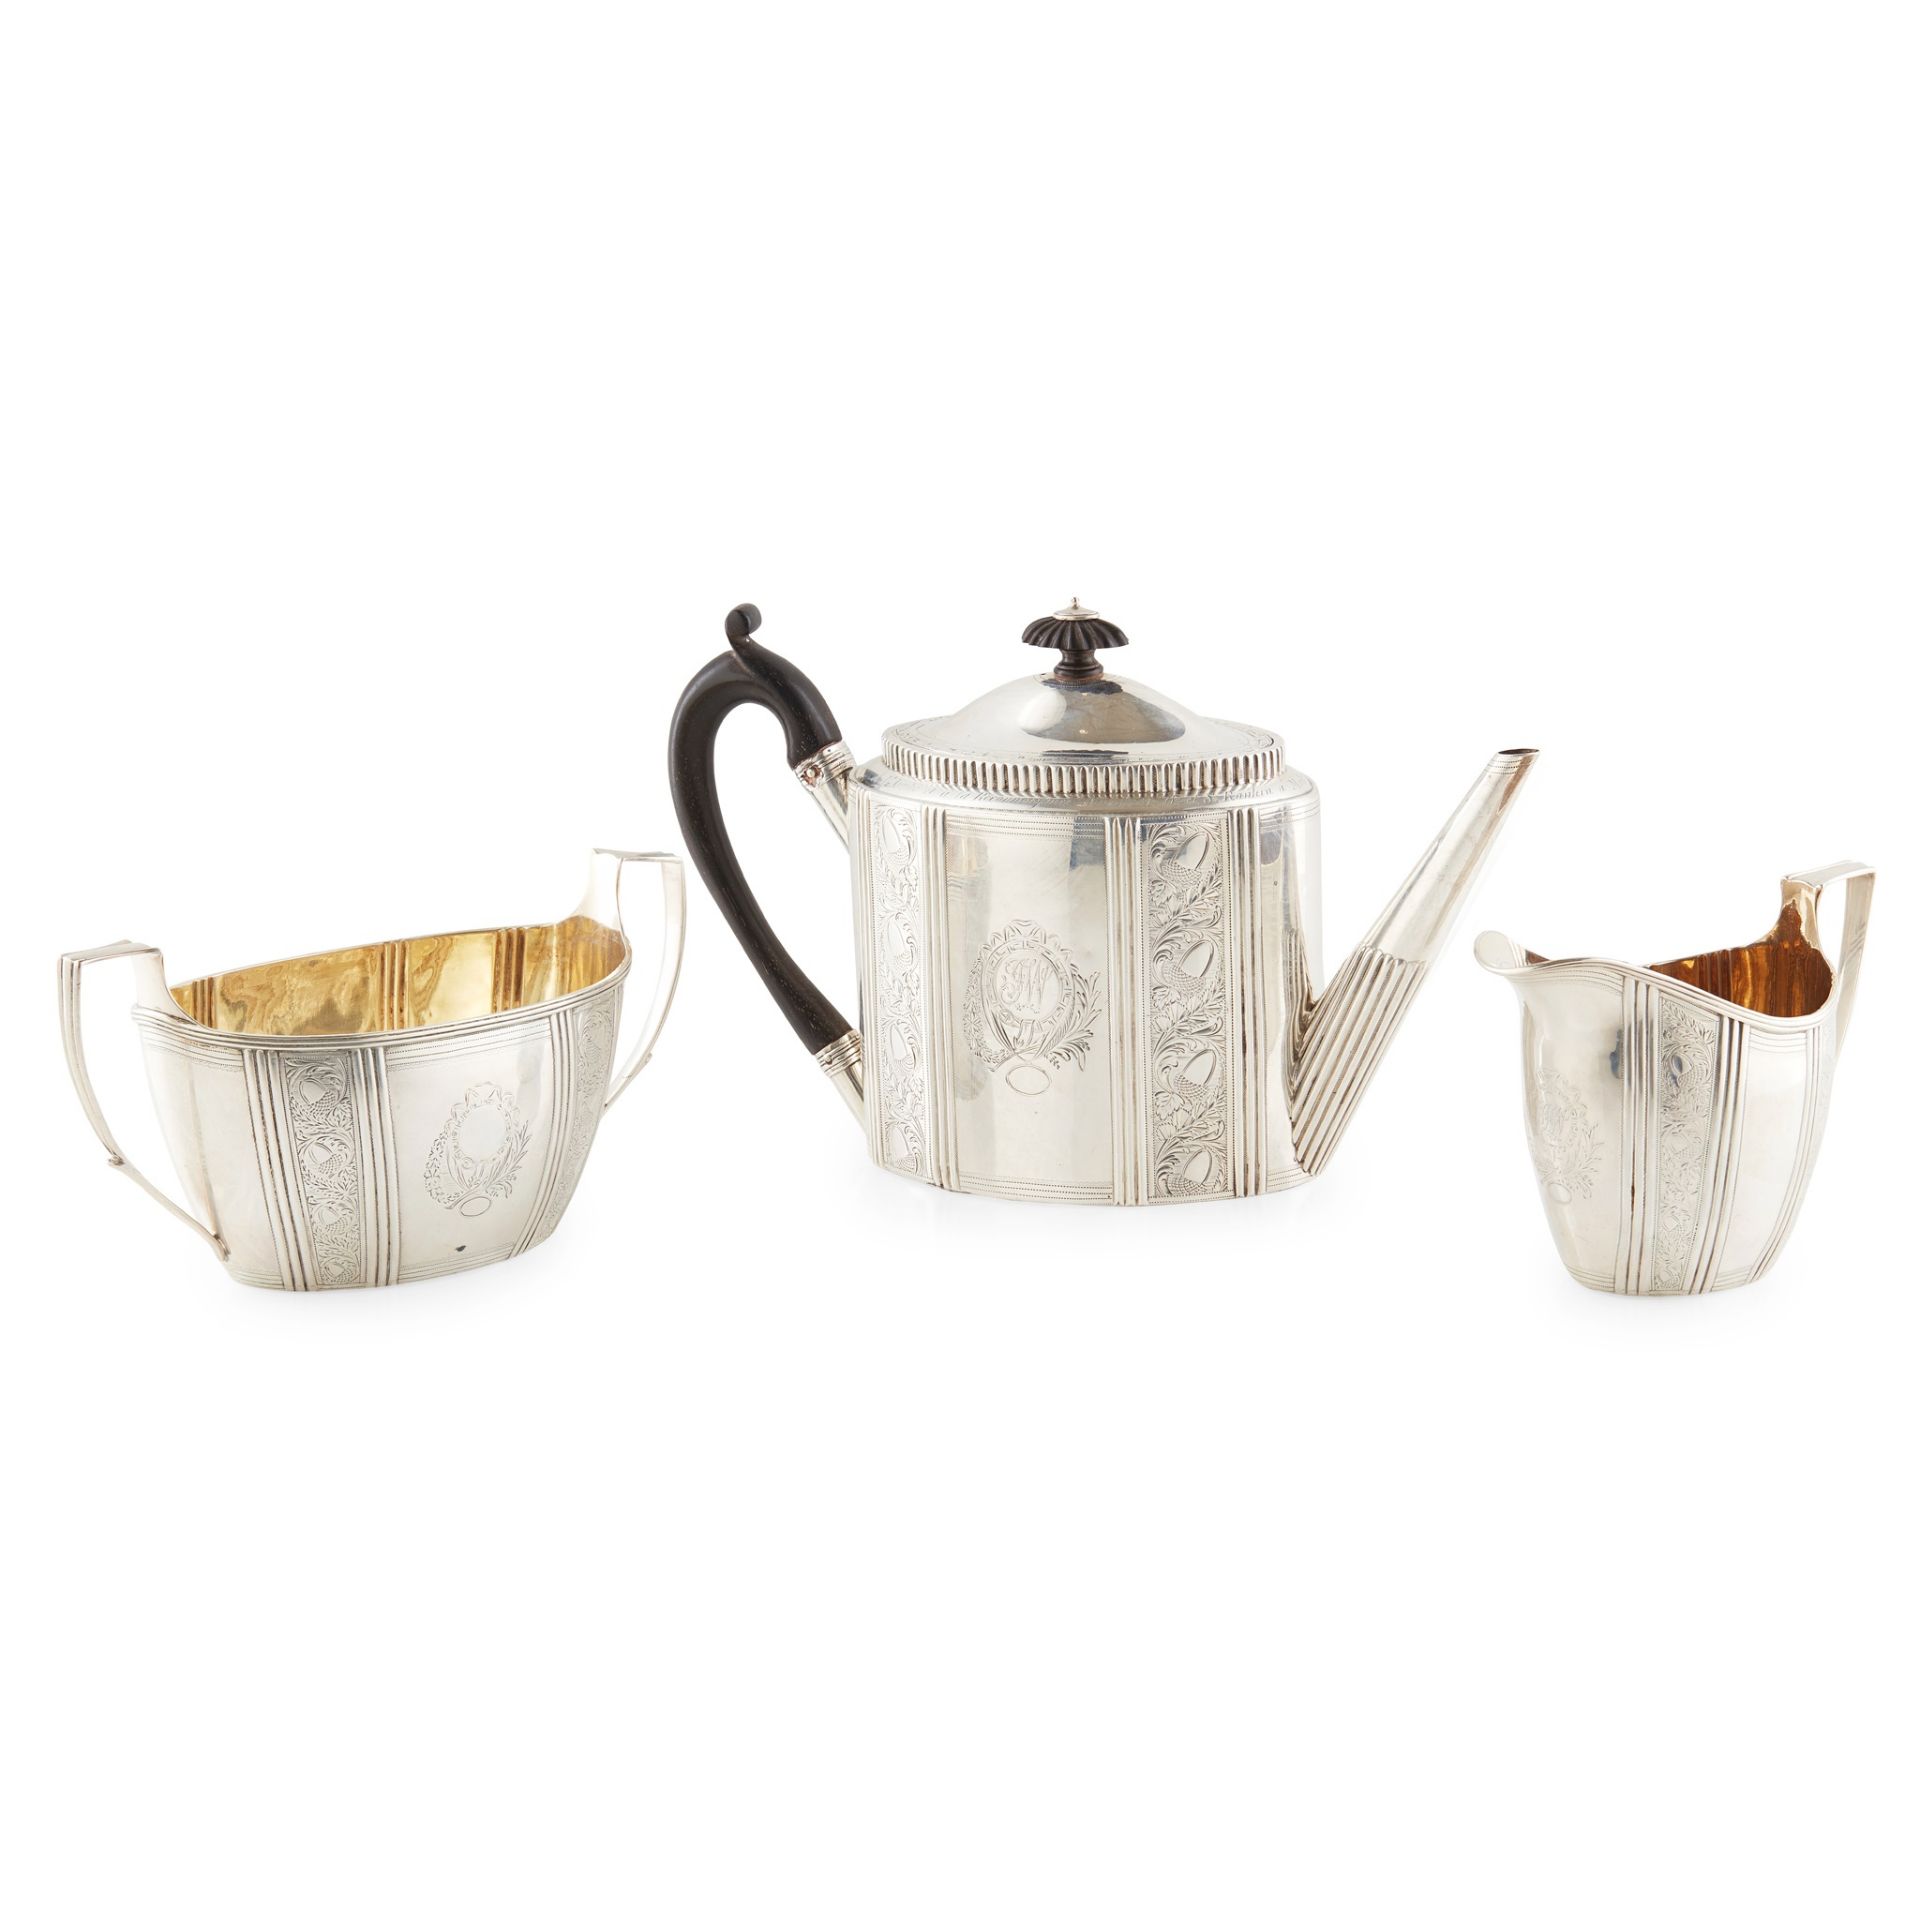 A matched George III three piece tea service